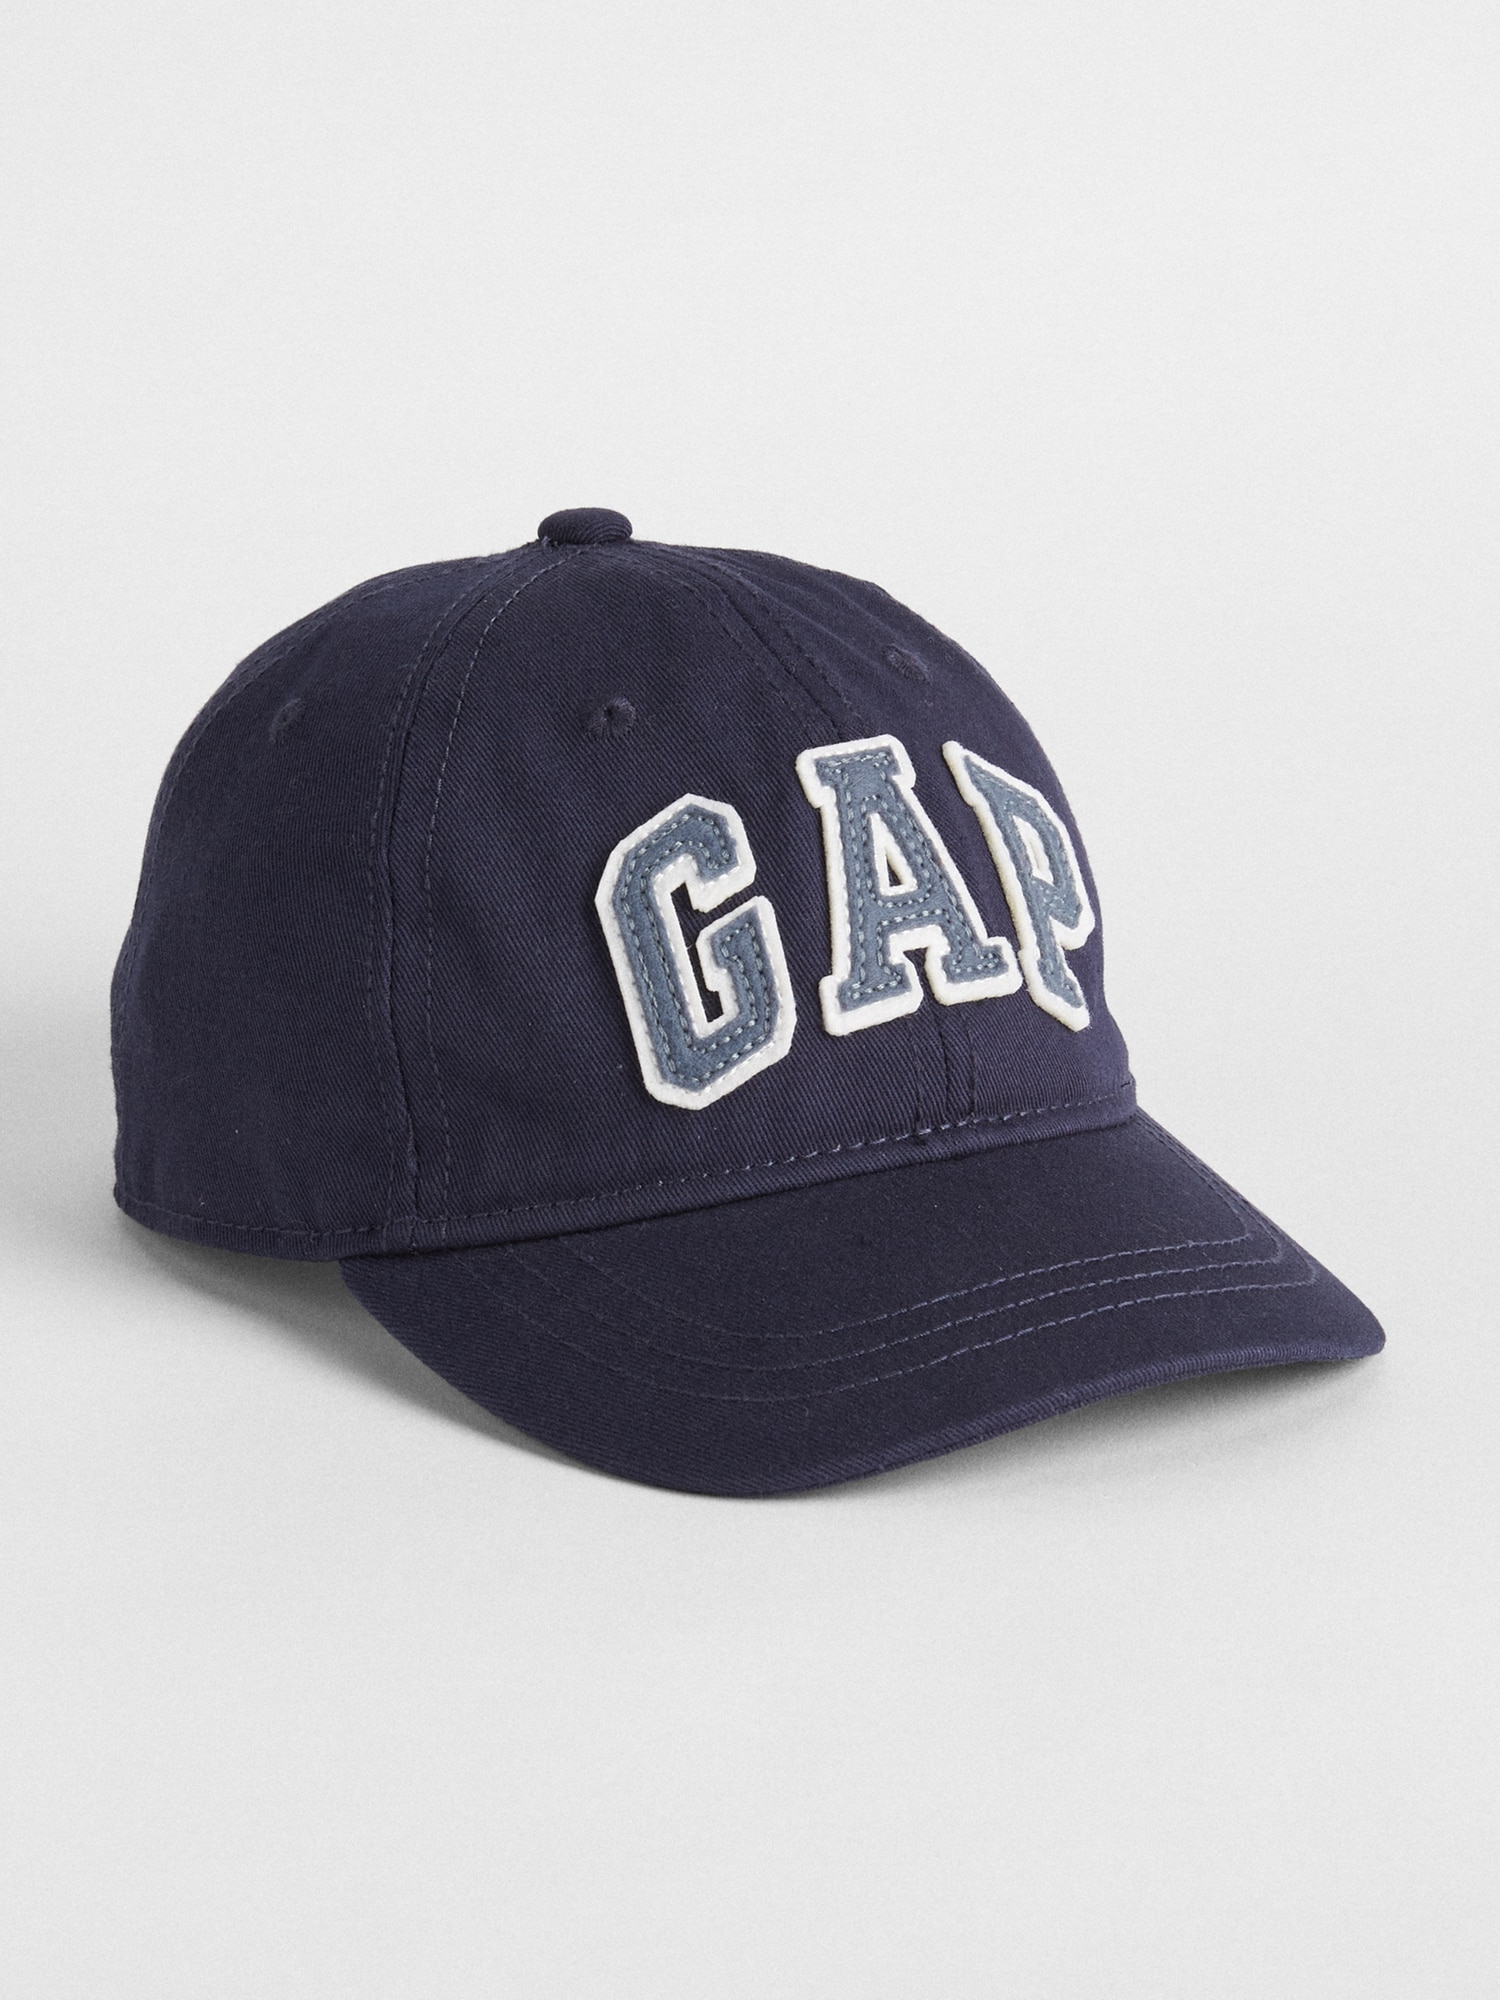 GAP Kids Cap Logo baseball hat - Boys